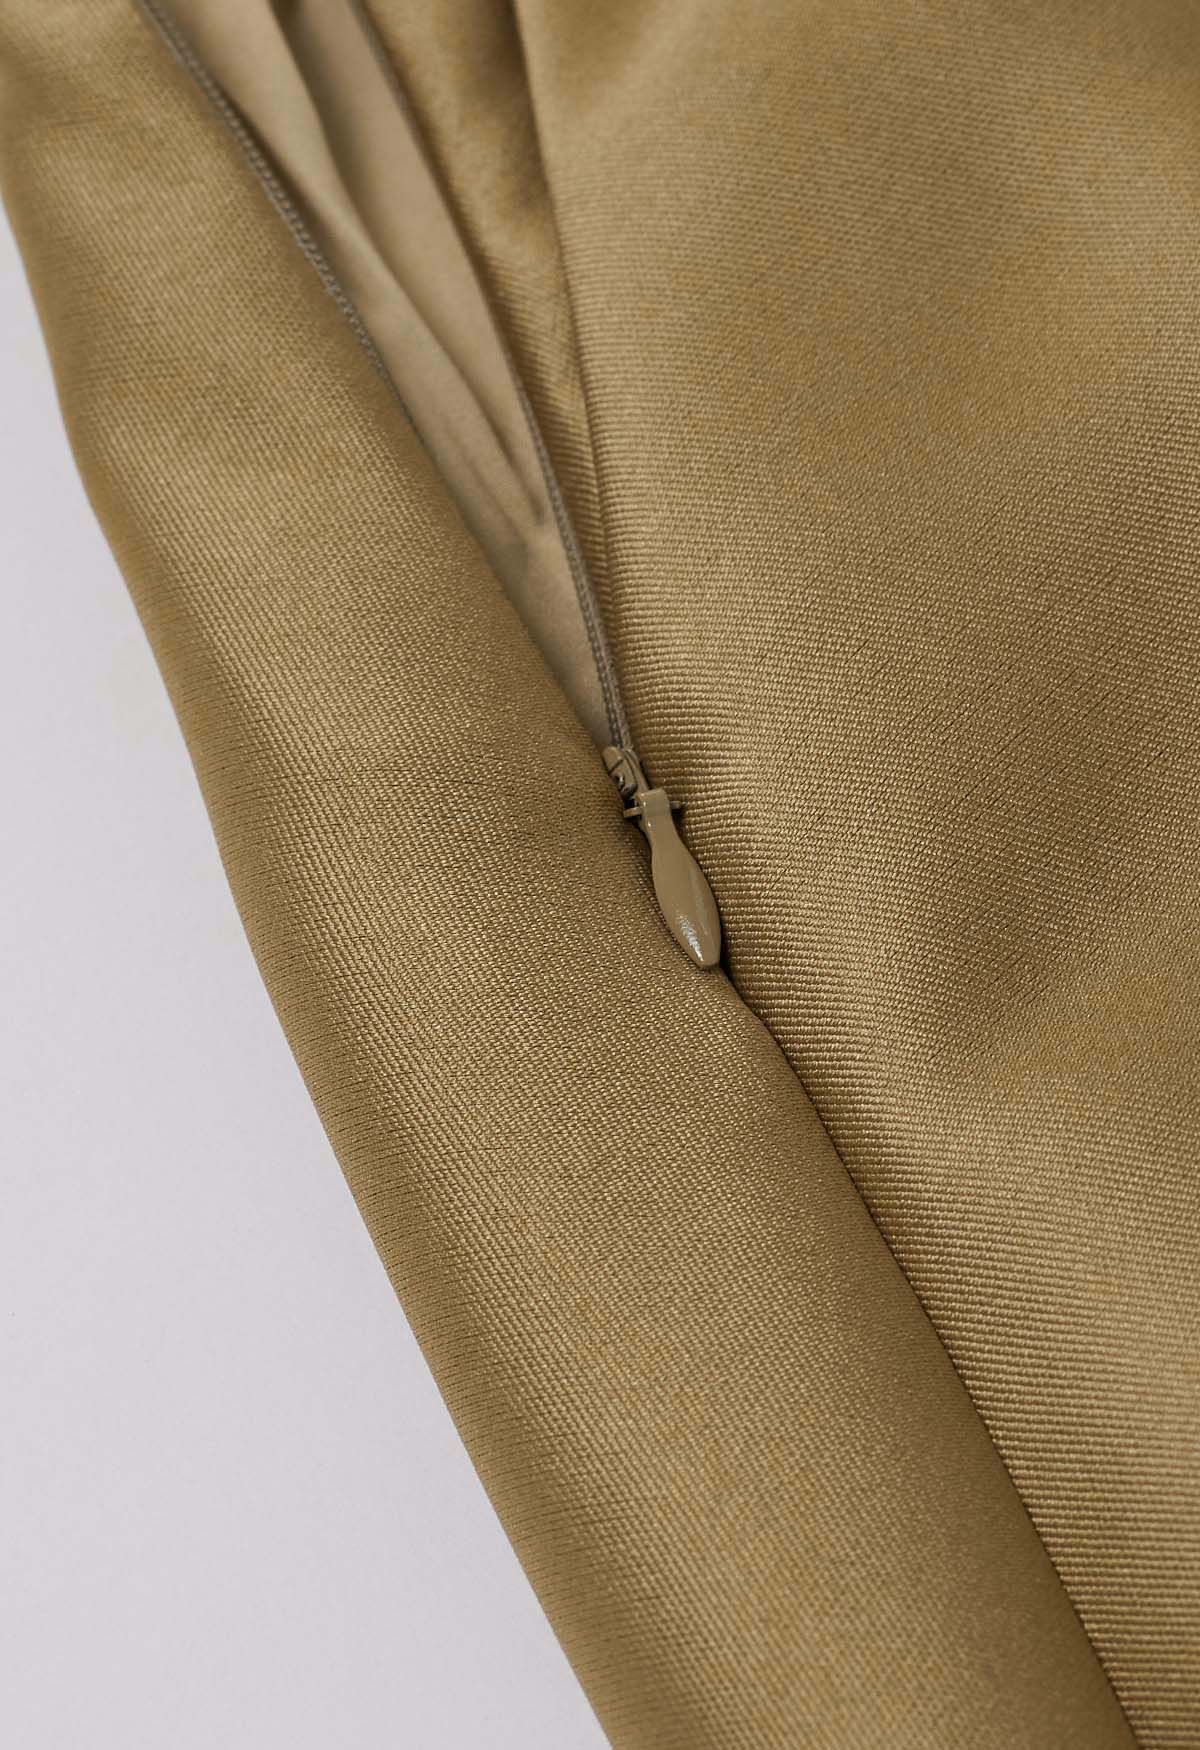 Sleek Side Pockets Pleated A-Line Midi Skirt in Gold